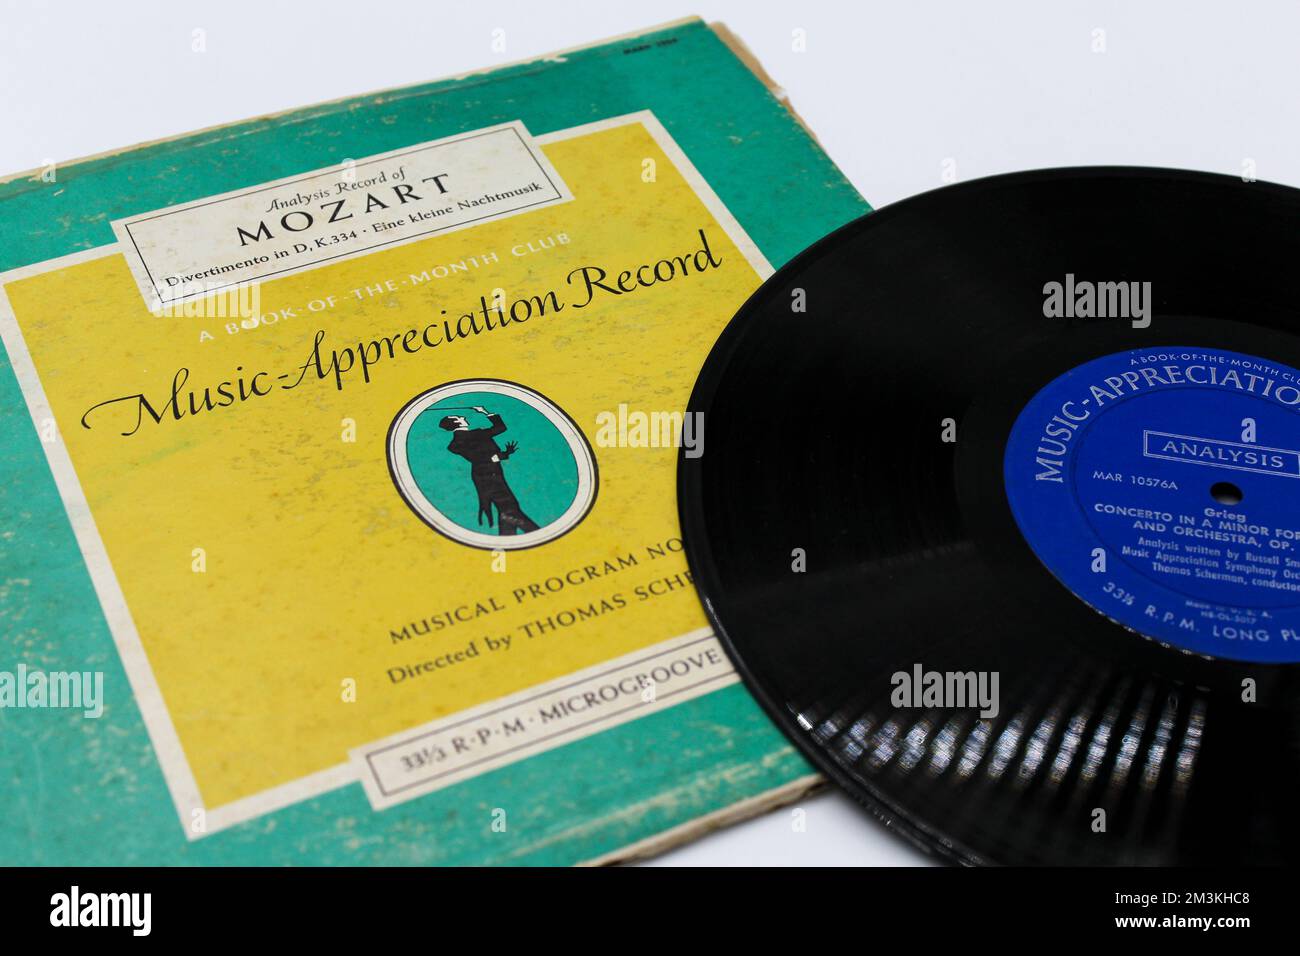 Music Appreciation Record: Analysis Record of Mozart Divertimento in D, K 334, Eine Kleine Nachtmusik on Vinyl Record LP Partial Album Cover Stock Photo